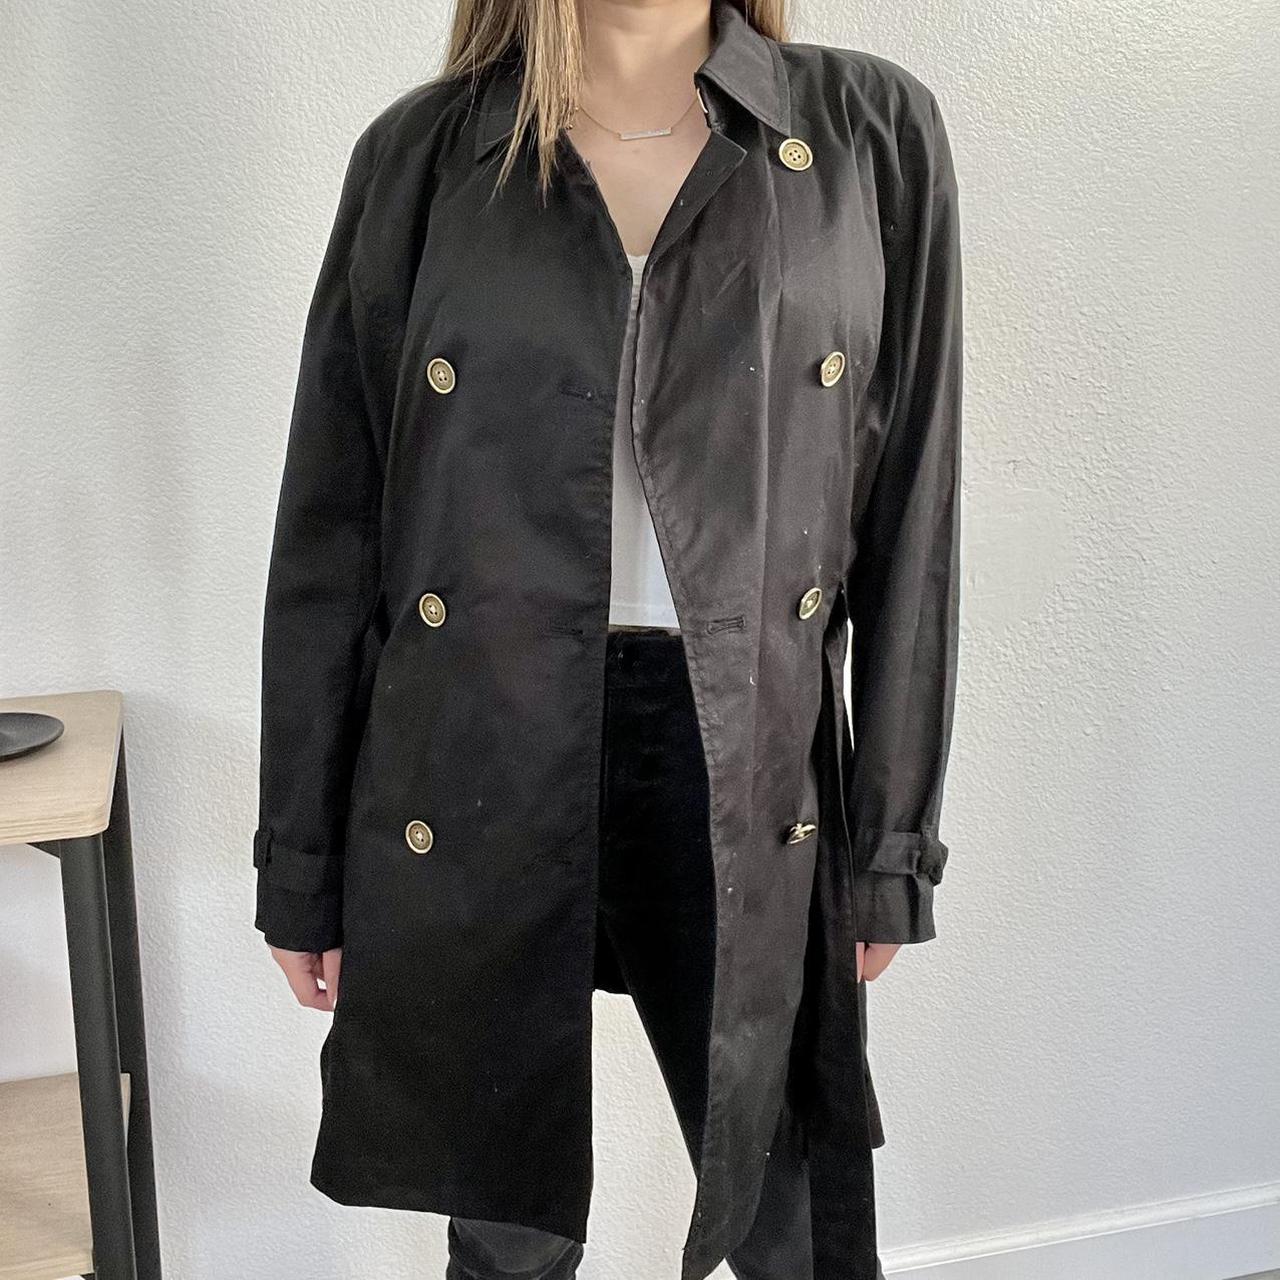 Michael Kors Women's Black Coat